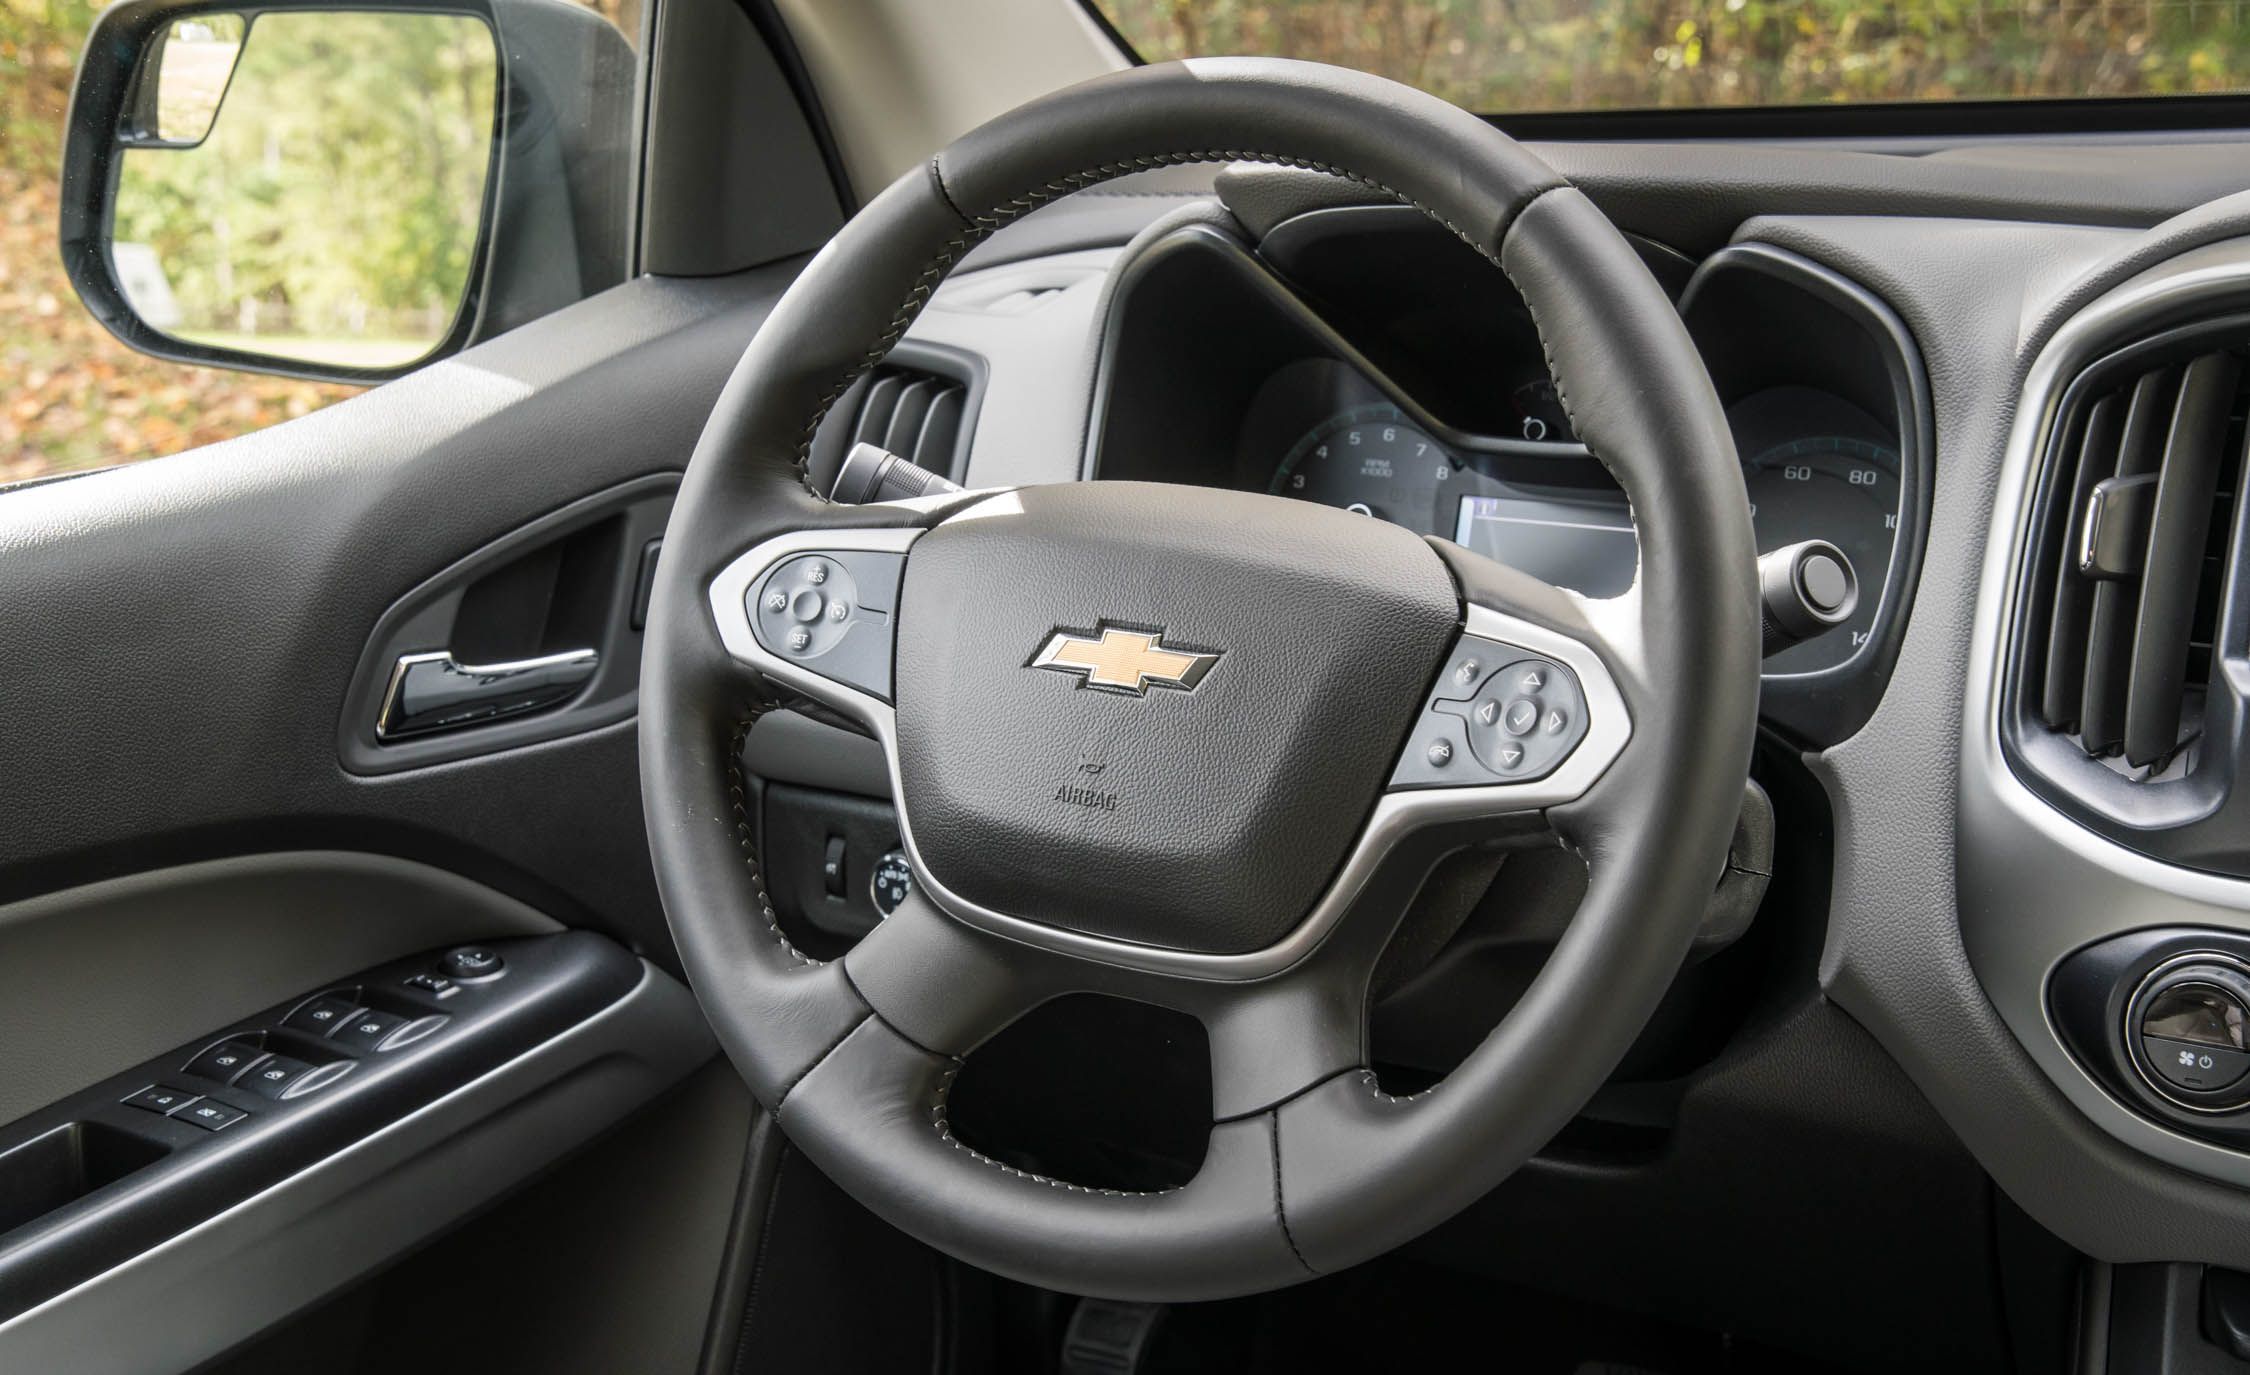 2017 Chevrolet Colorado Lt Interior View Steering Wheel (View 6 of 41)